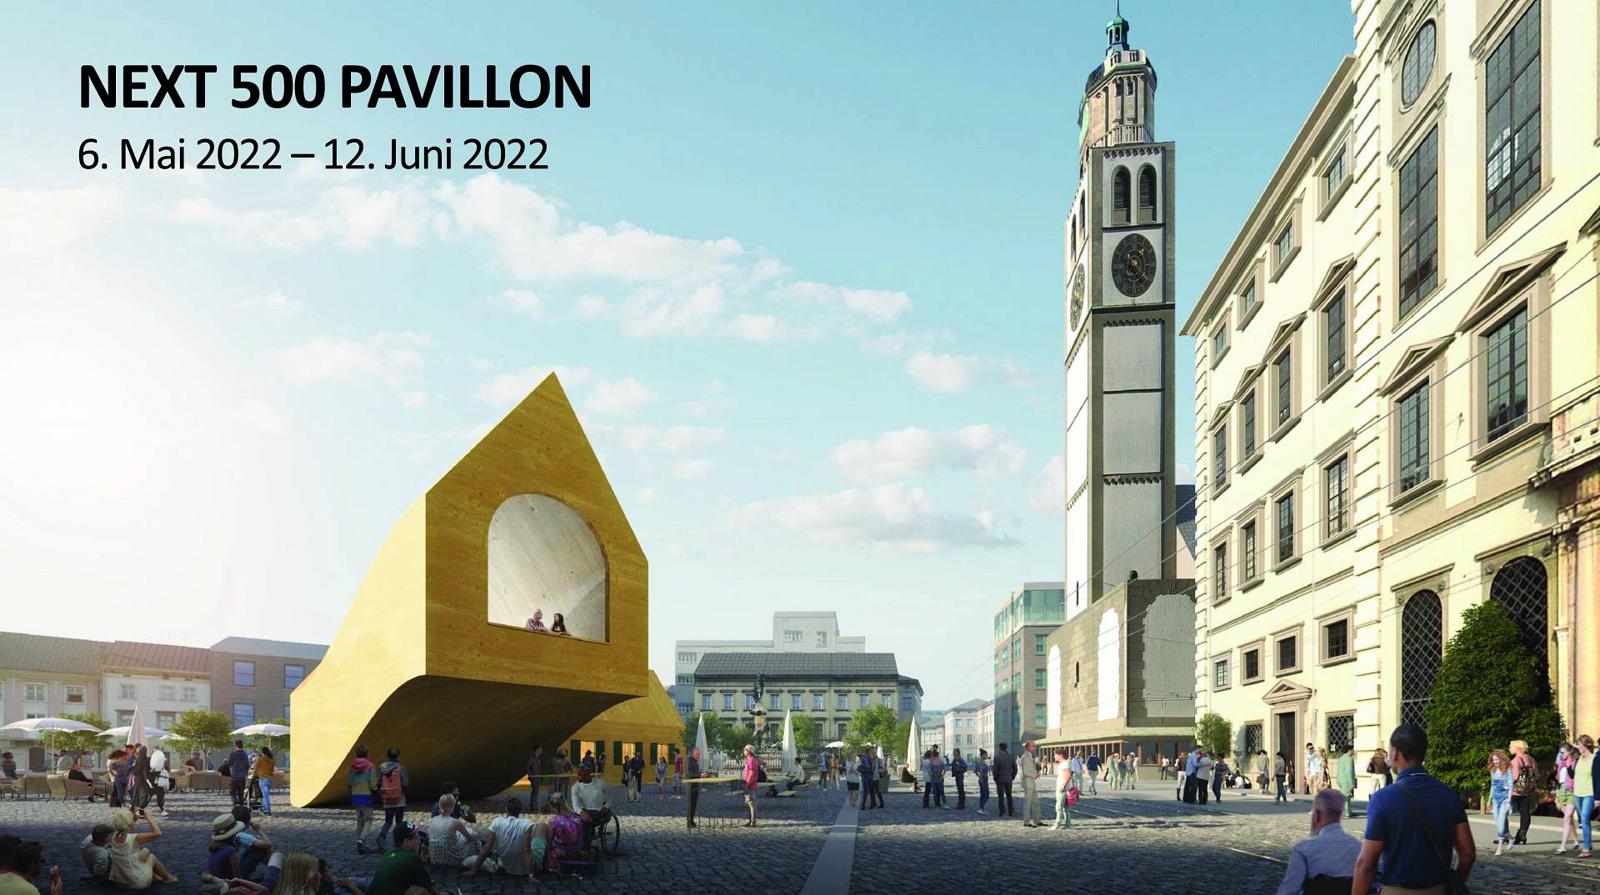 Next 500 Pavillon